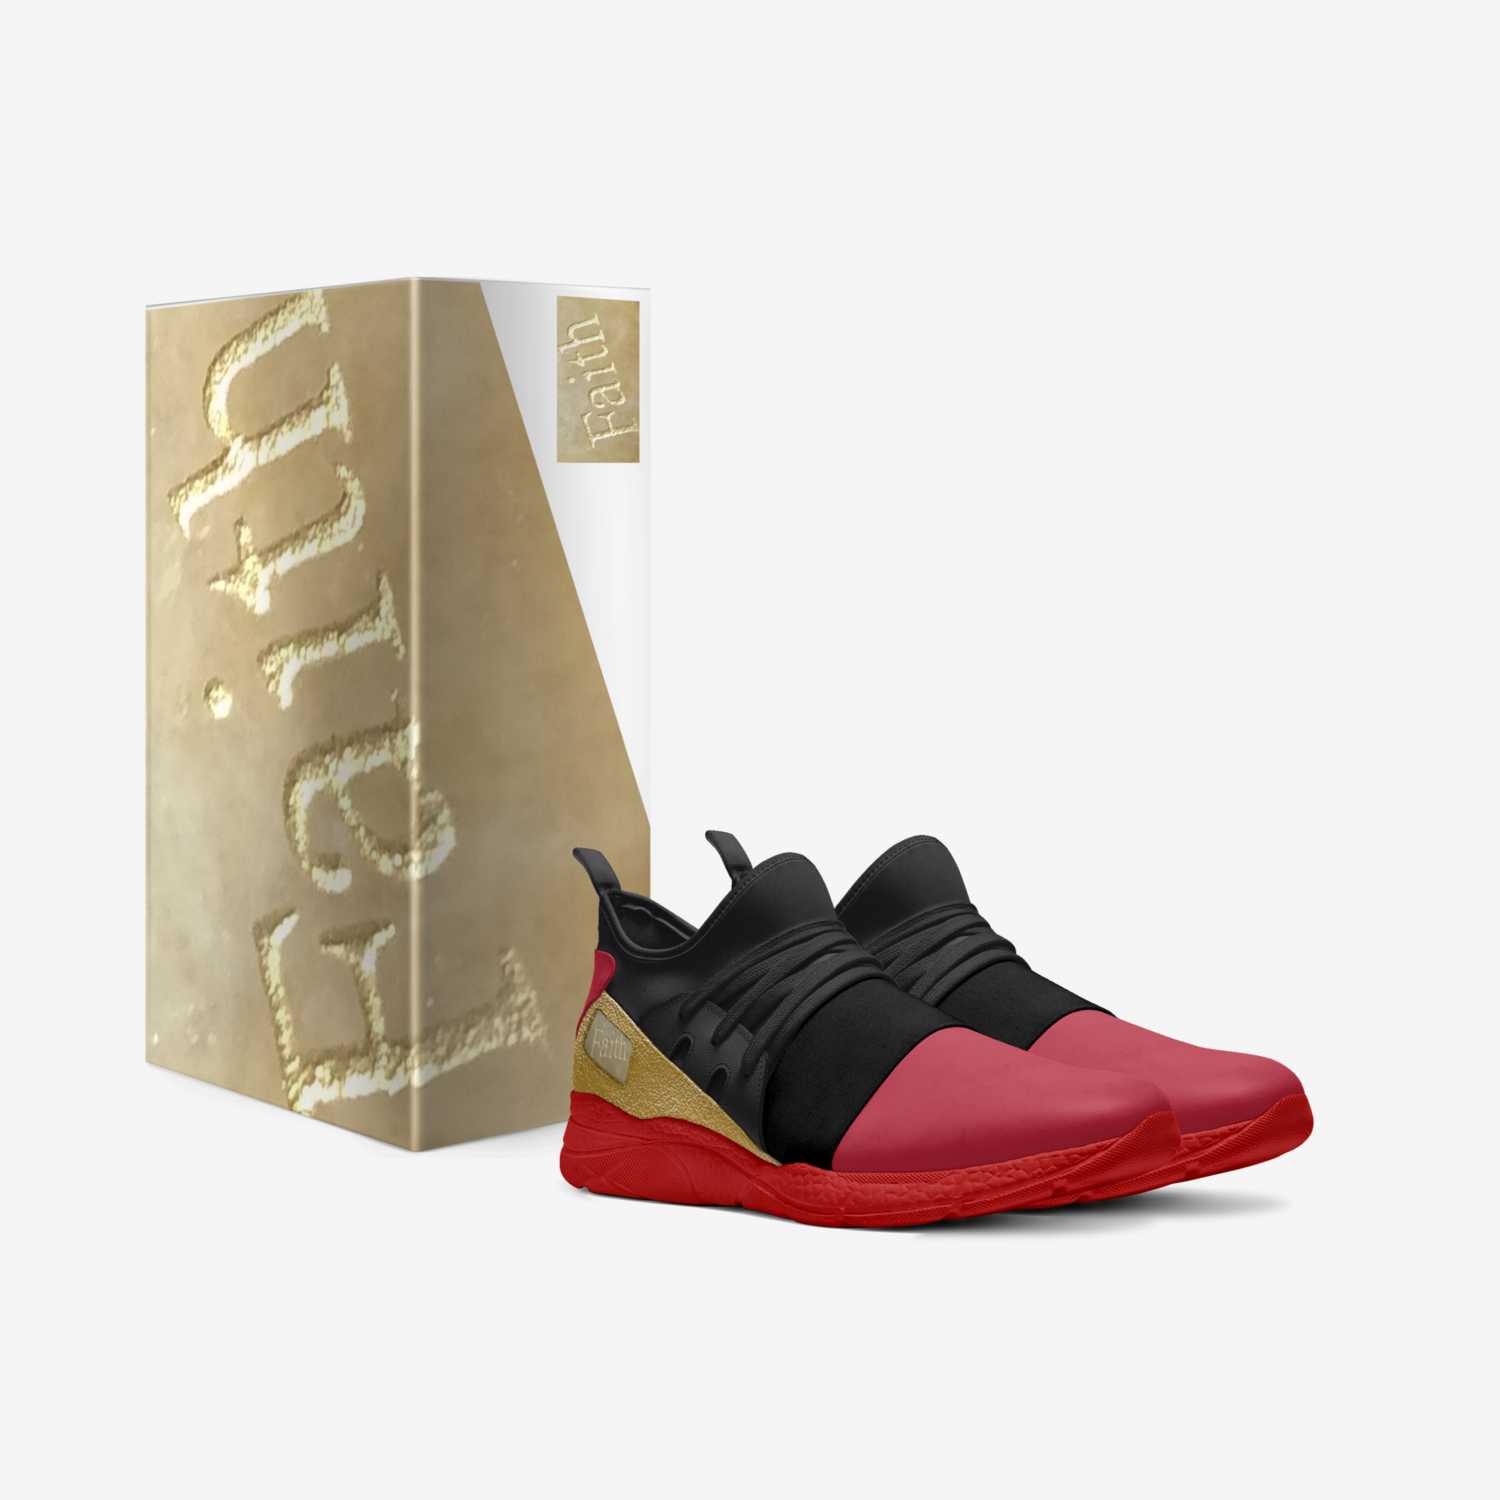 MY FAITH WALK custom made in Italy shoes by Cedric Harris | Box view